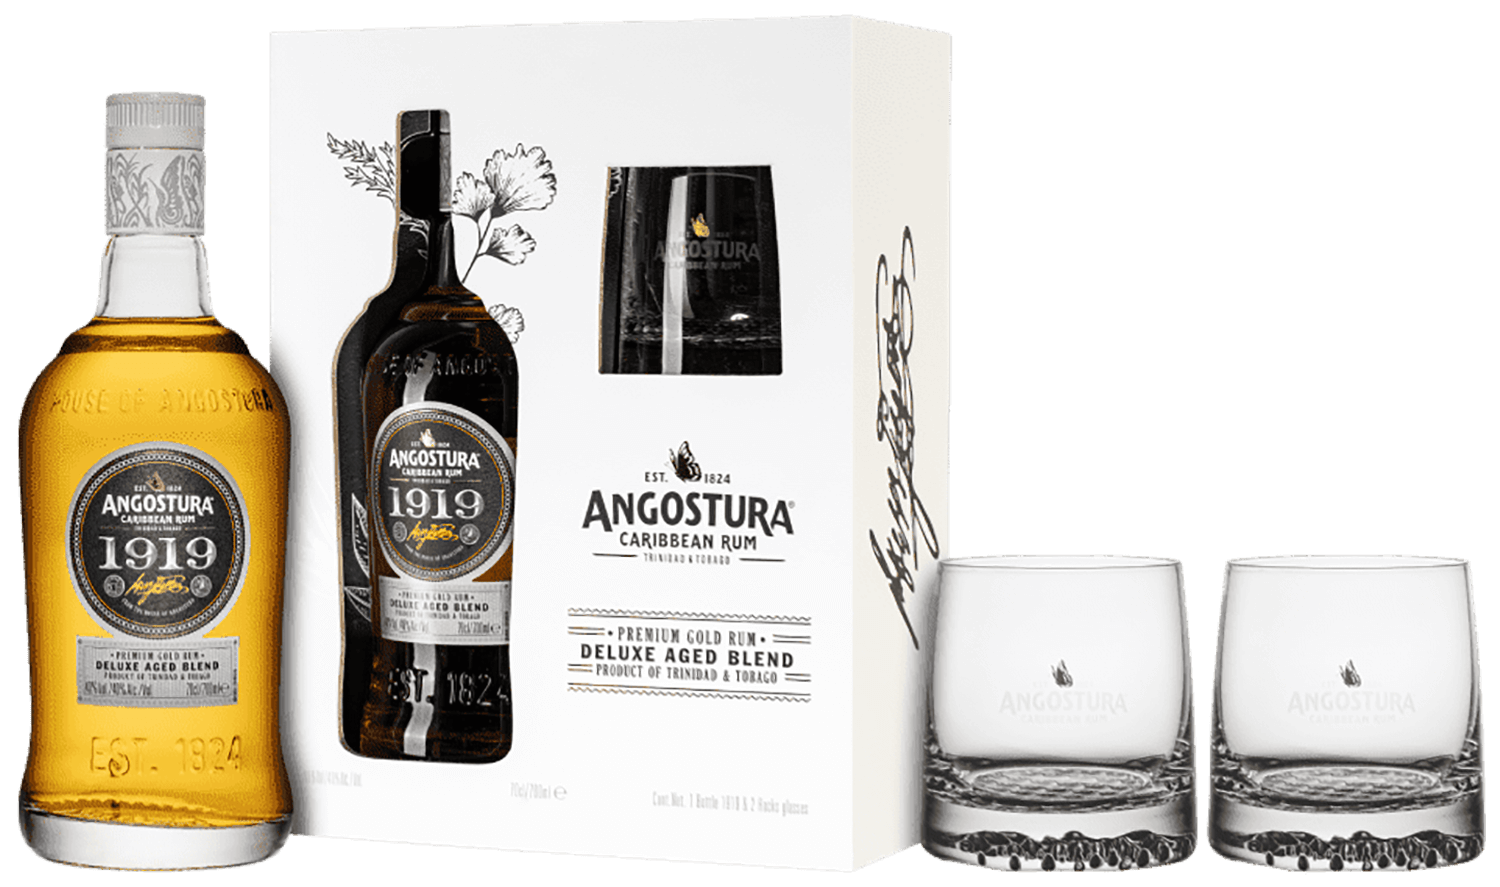 Angostura 1919 (gift box with 2 glasses)